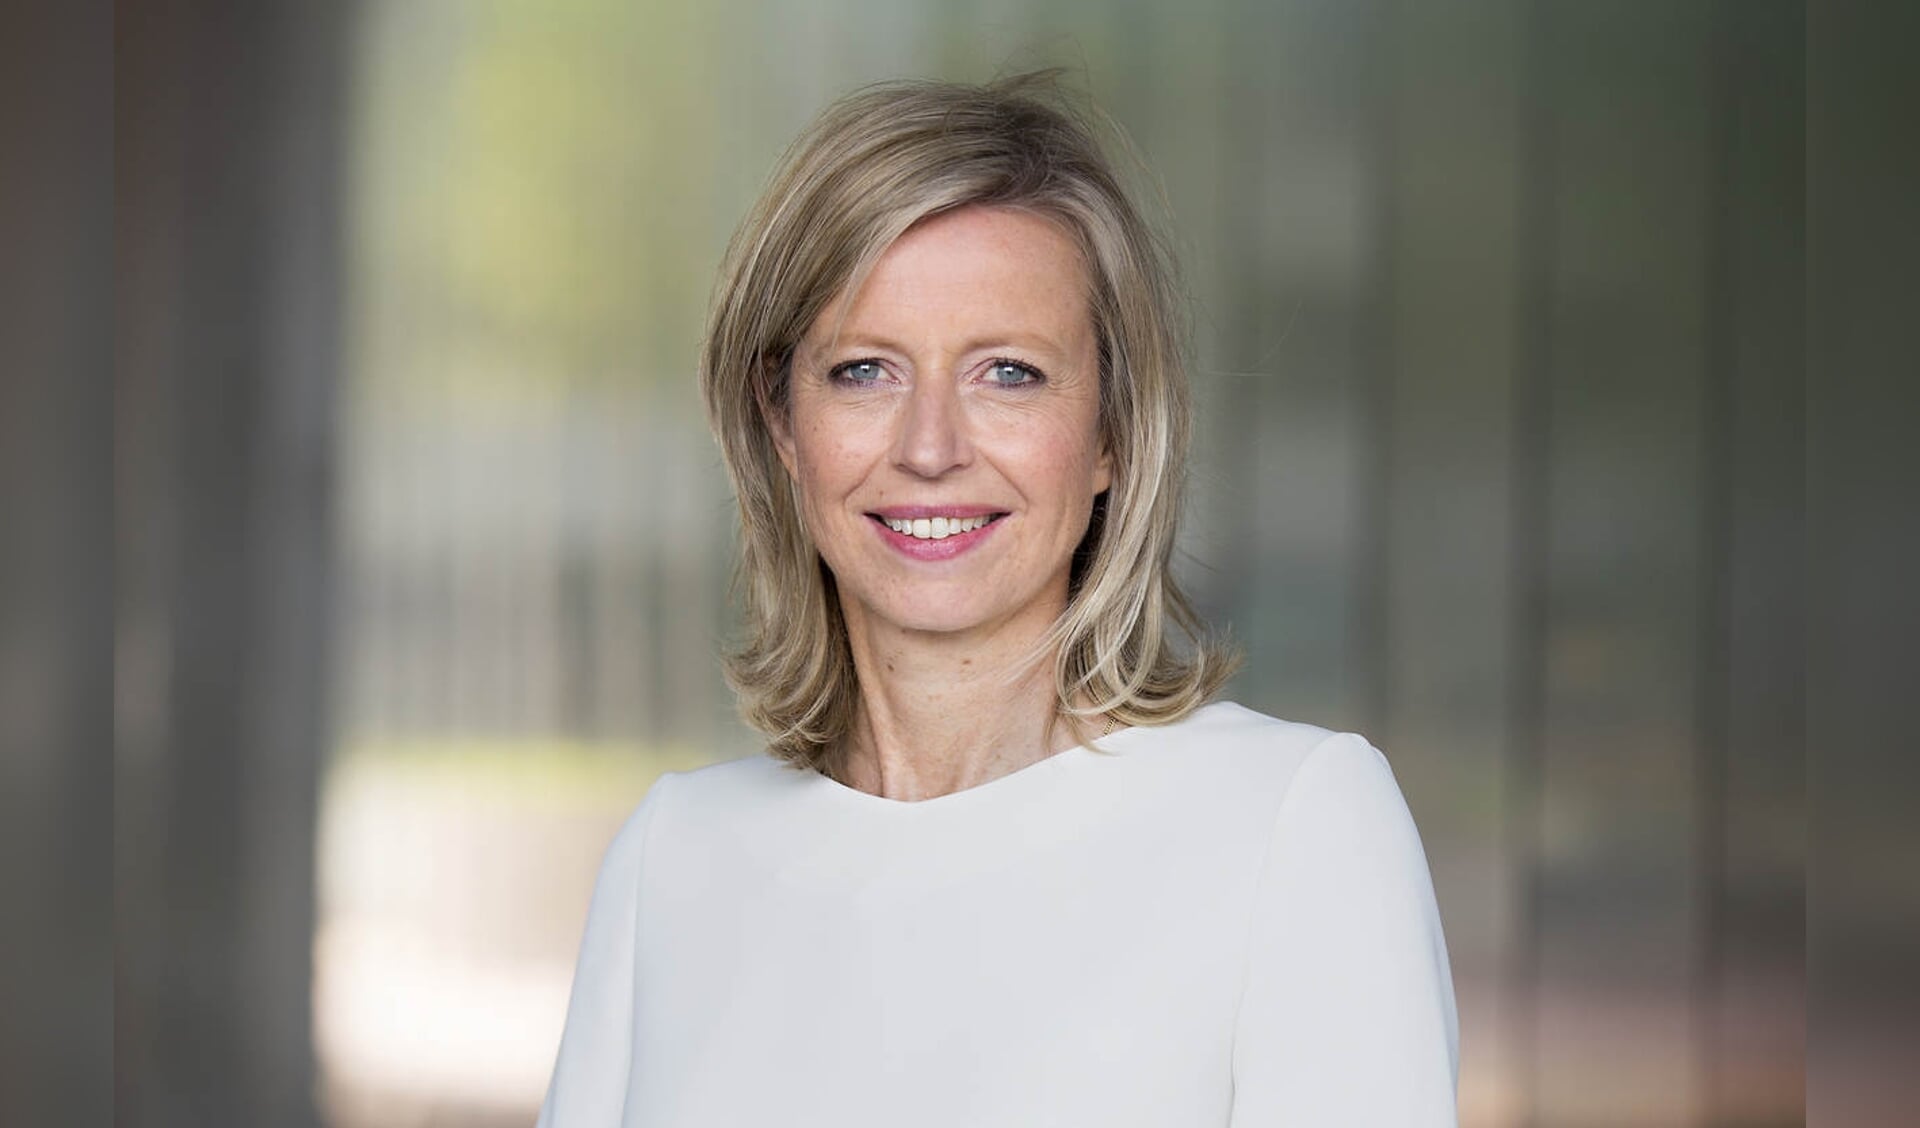 Kajsa Ollongren, demissionair minister van Binnenlandse Zaken en Koninkrijksrelaties, viceminister-president